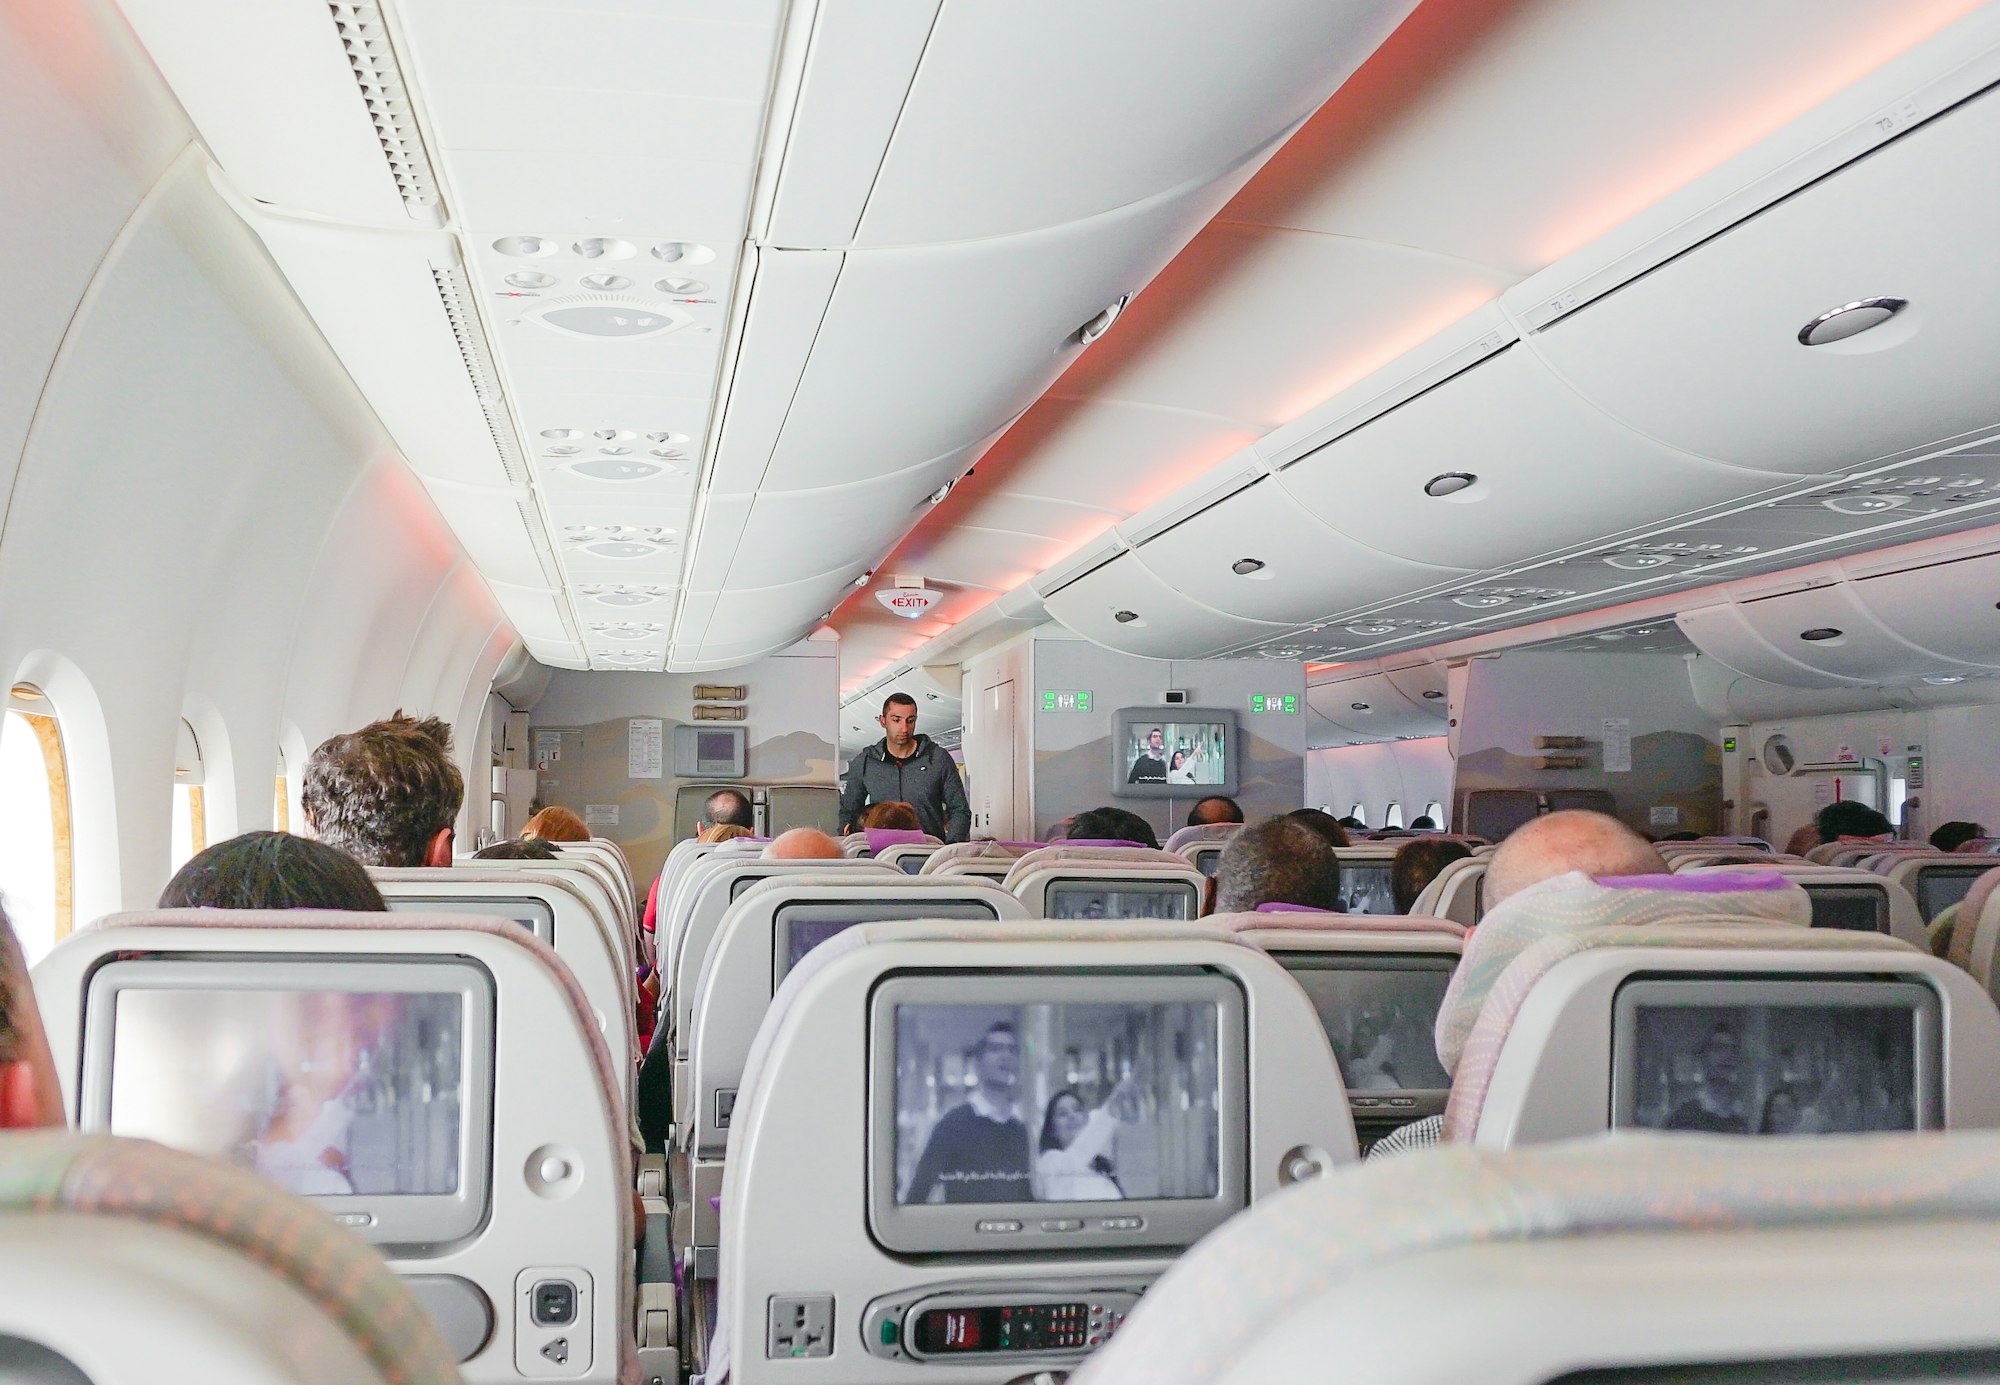 Emirates airline seating